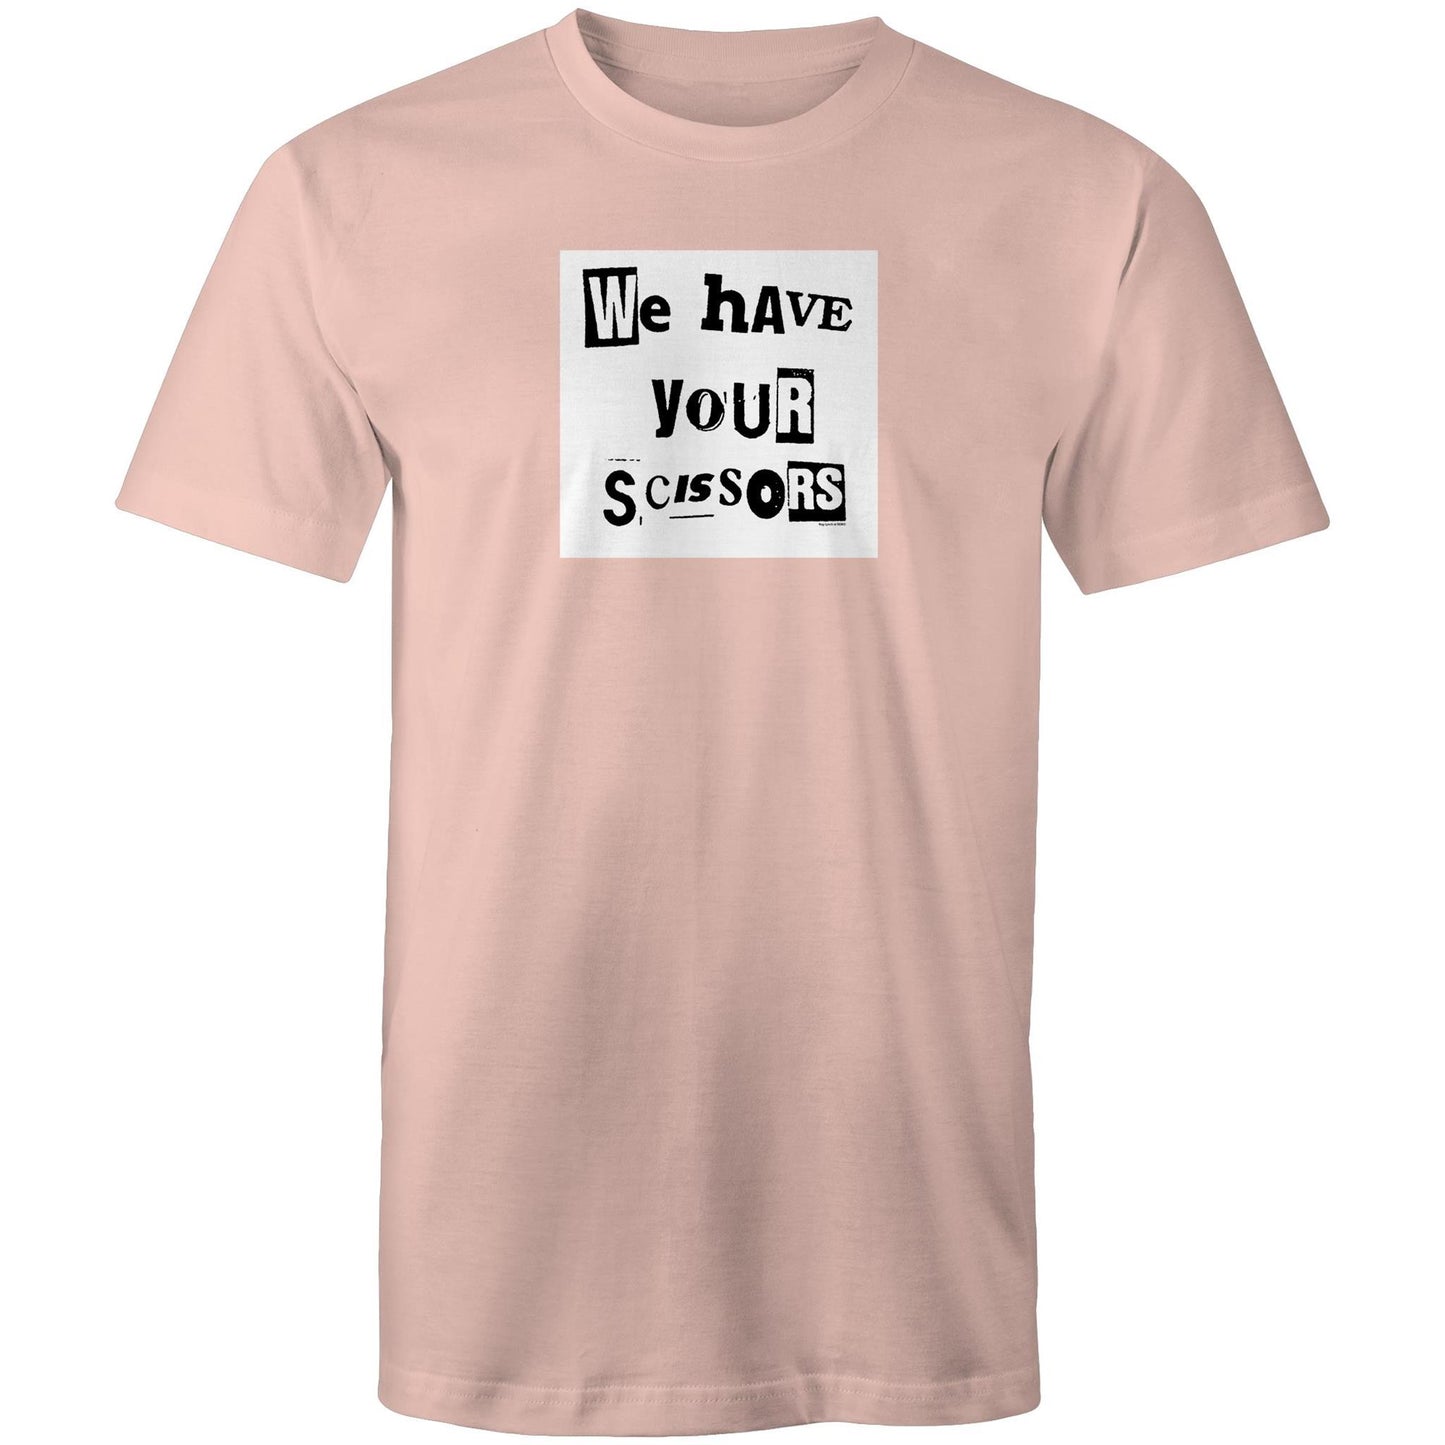 Scissors T Shirts for Men (Unisex)